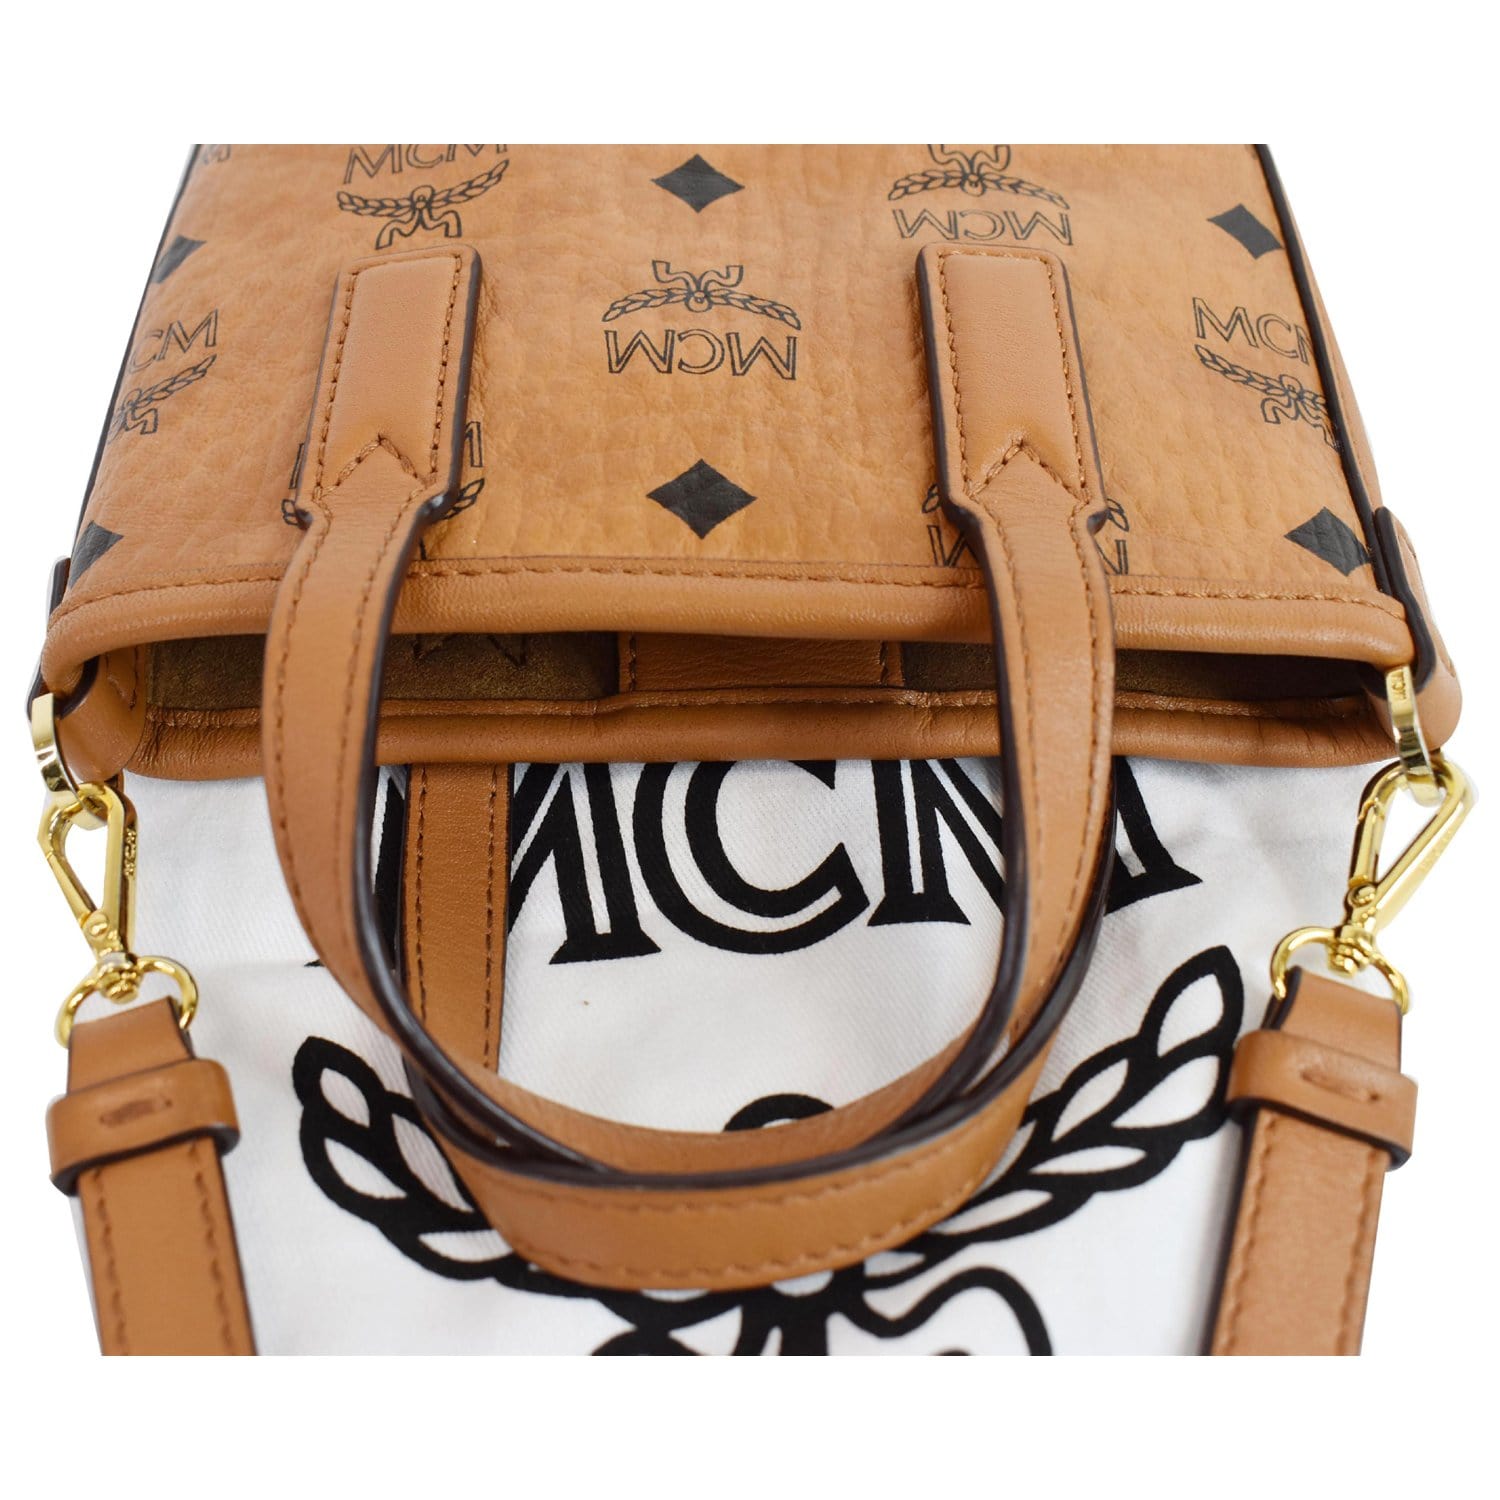 Mcm Mini Anna Visetos Canvas Crossbody Bag - Cognac MWRBSNN01CO  8809675915969 - Handbags, MCM - Jomashop